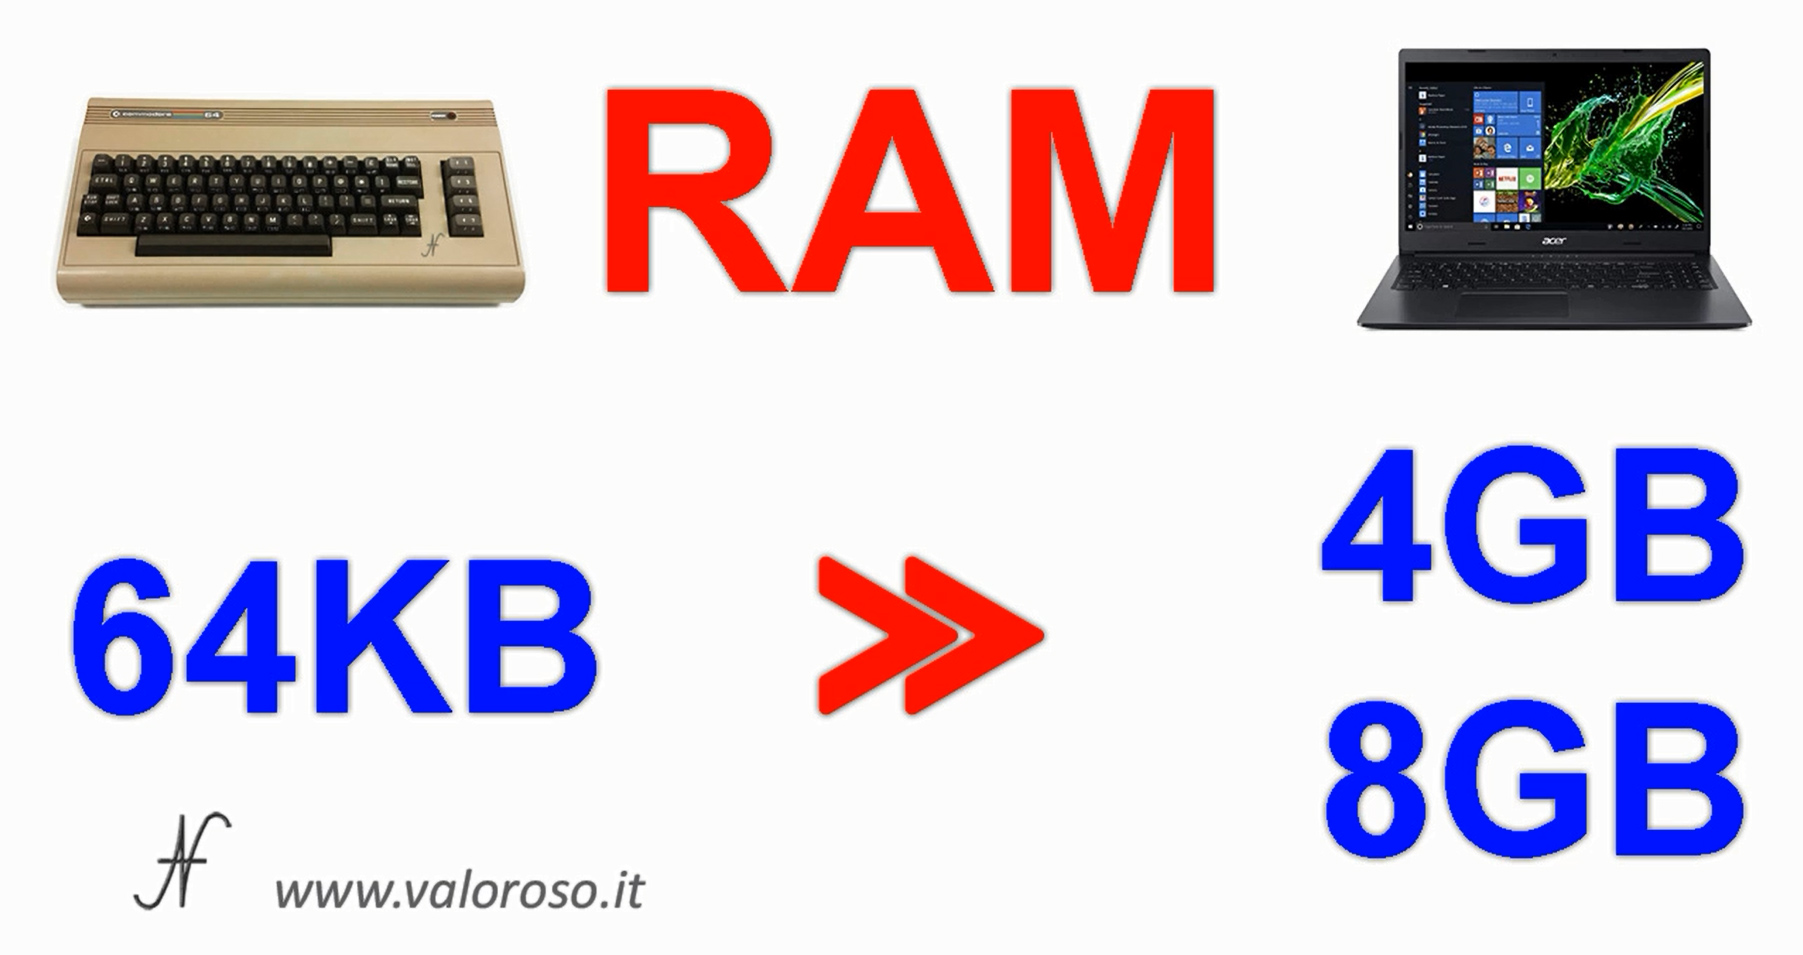 Commodore 64 Vs PC moderno, confronto capacità memoria RAM, KByte, GByte